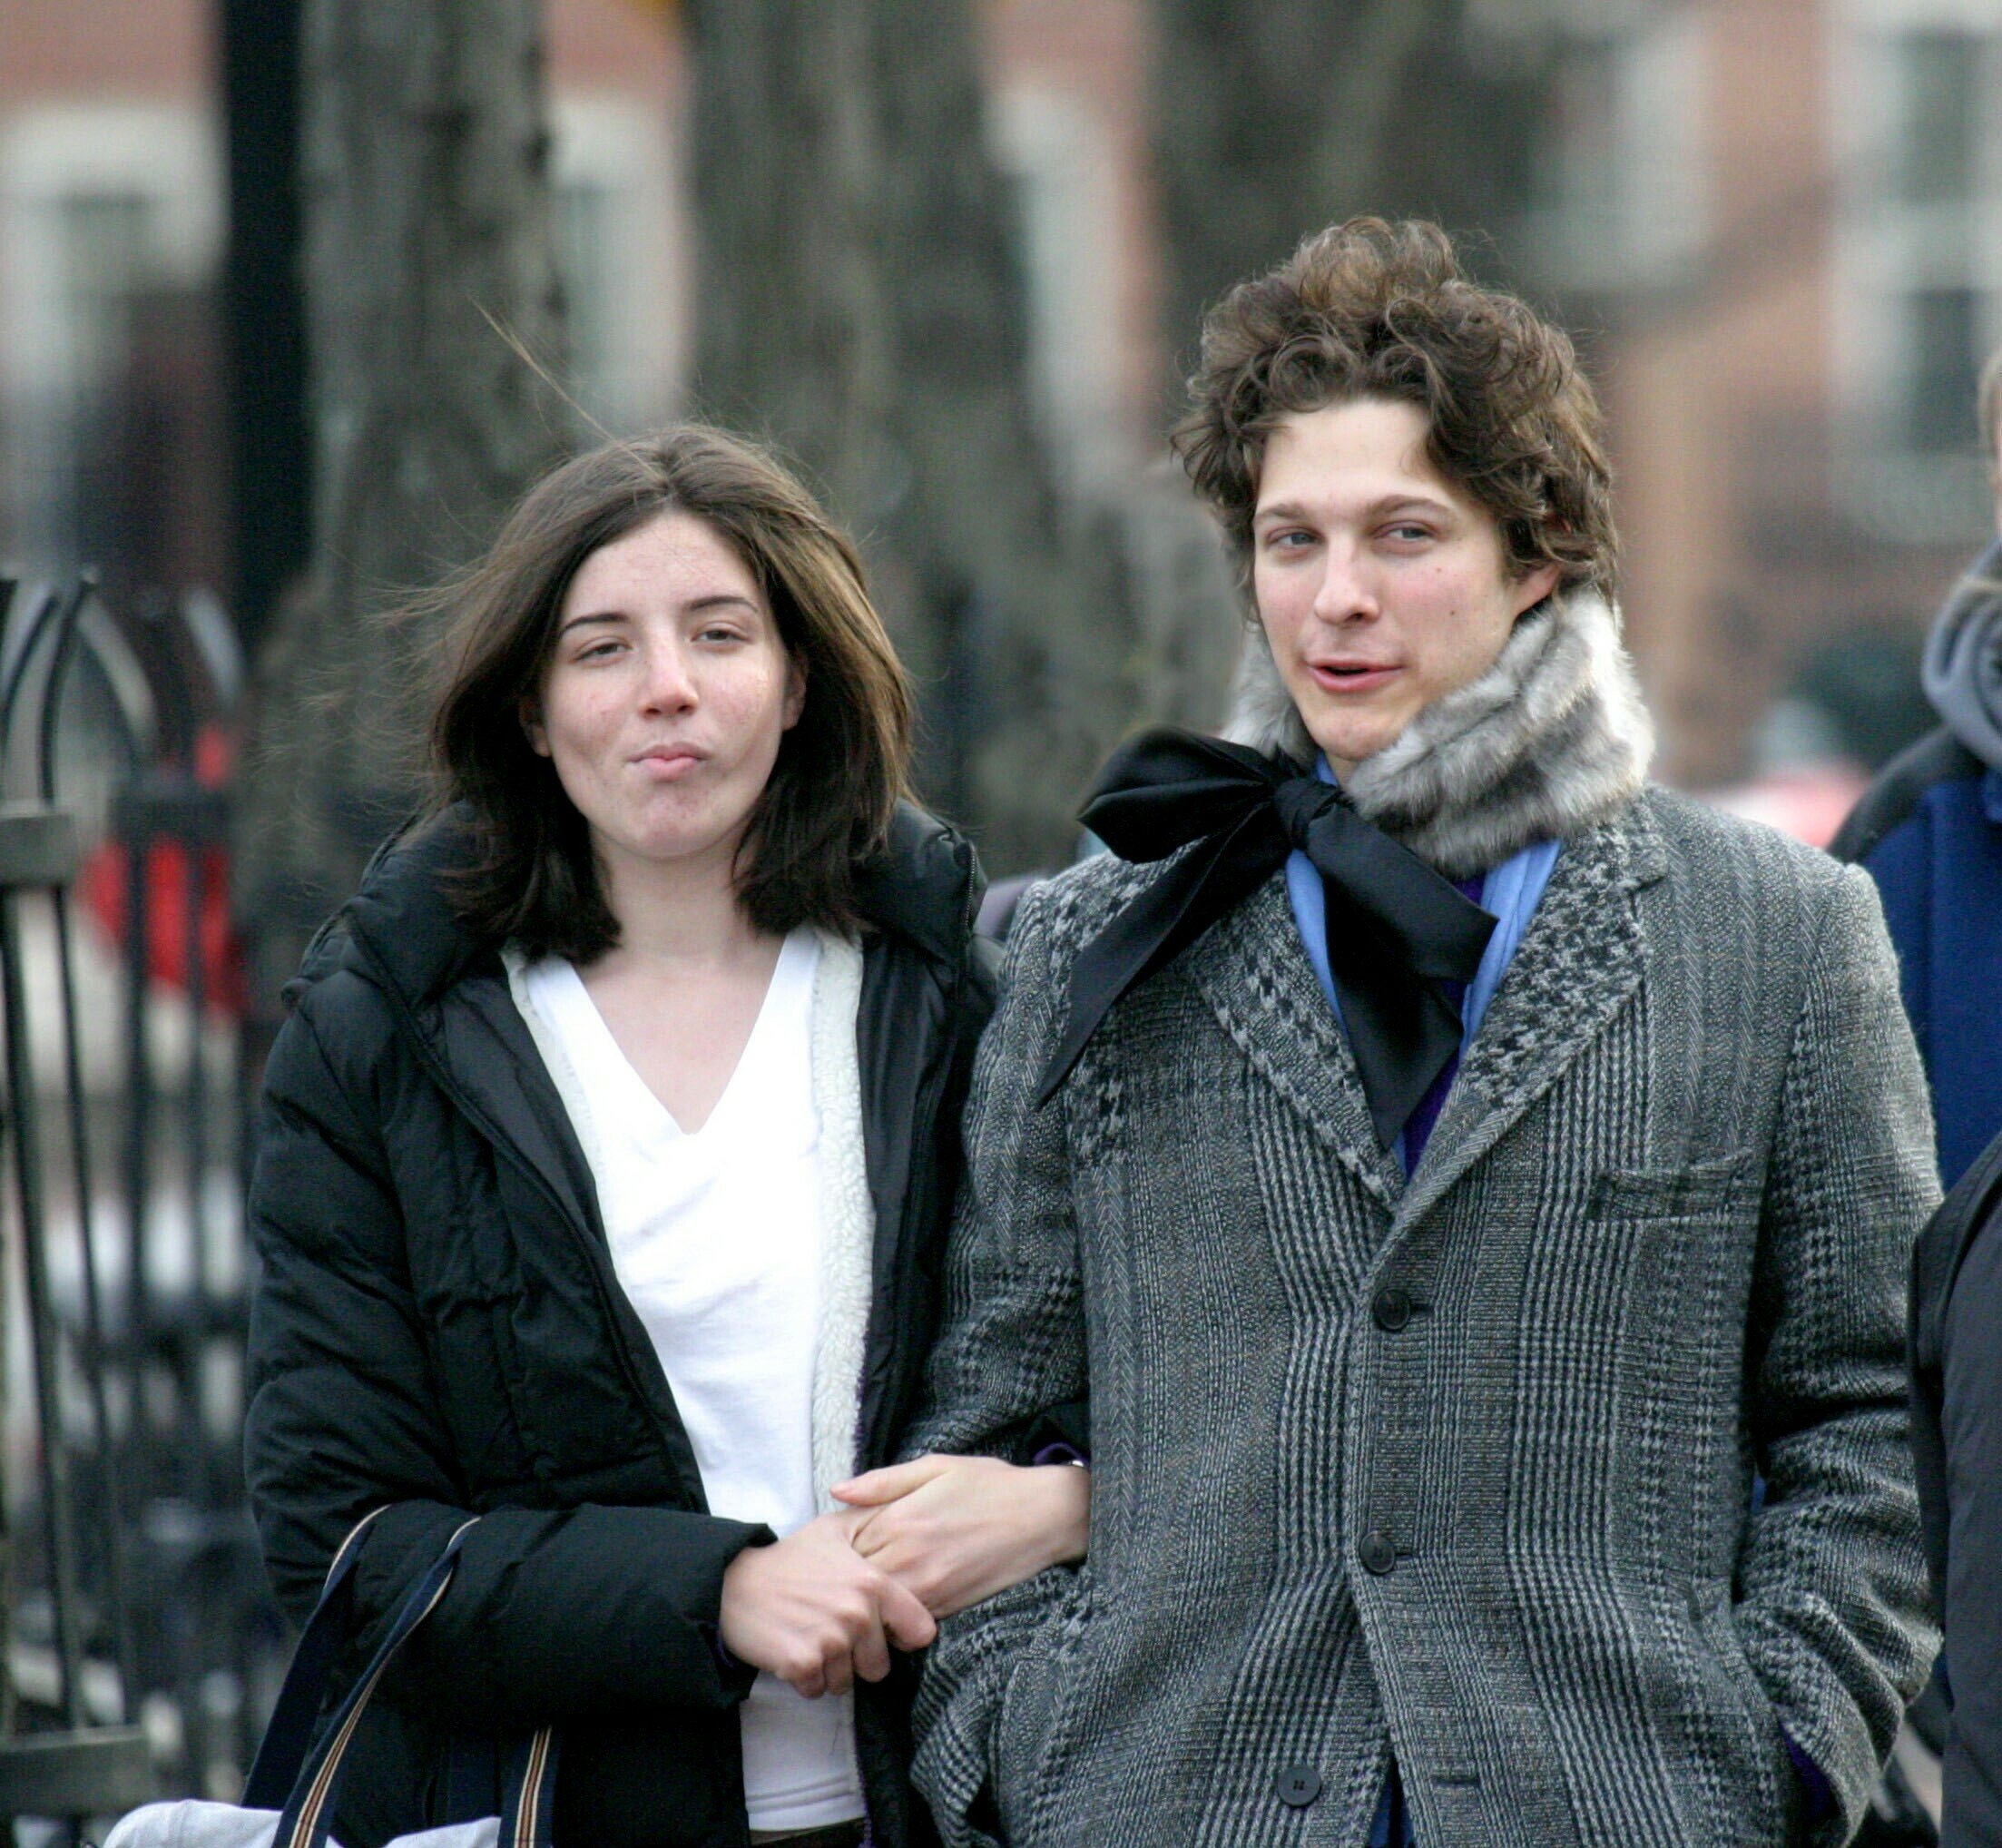 Harvard Square Walking couple.jpg